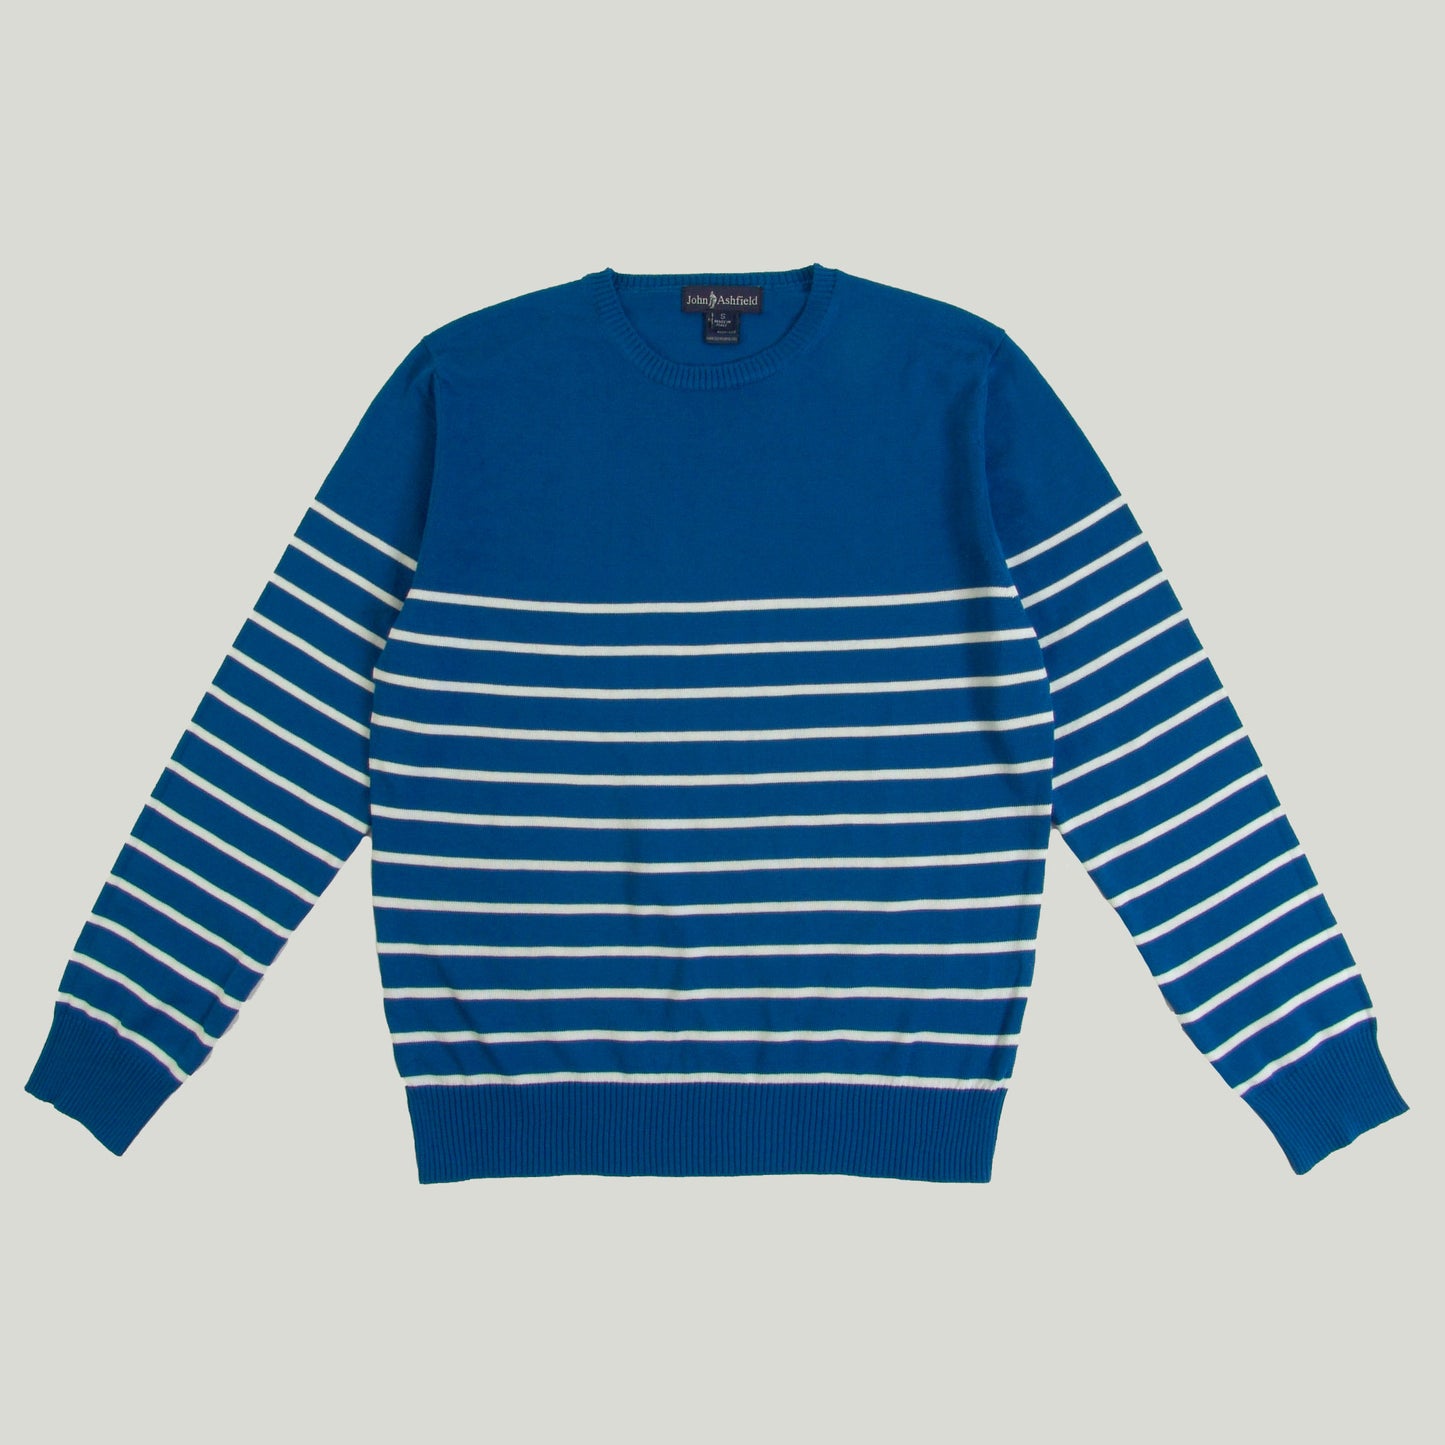 Men's Striped Sweater in cotton